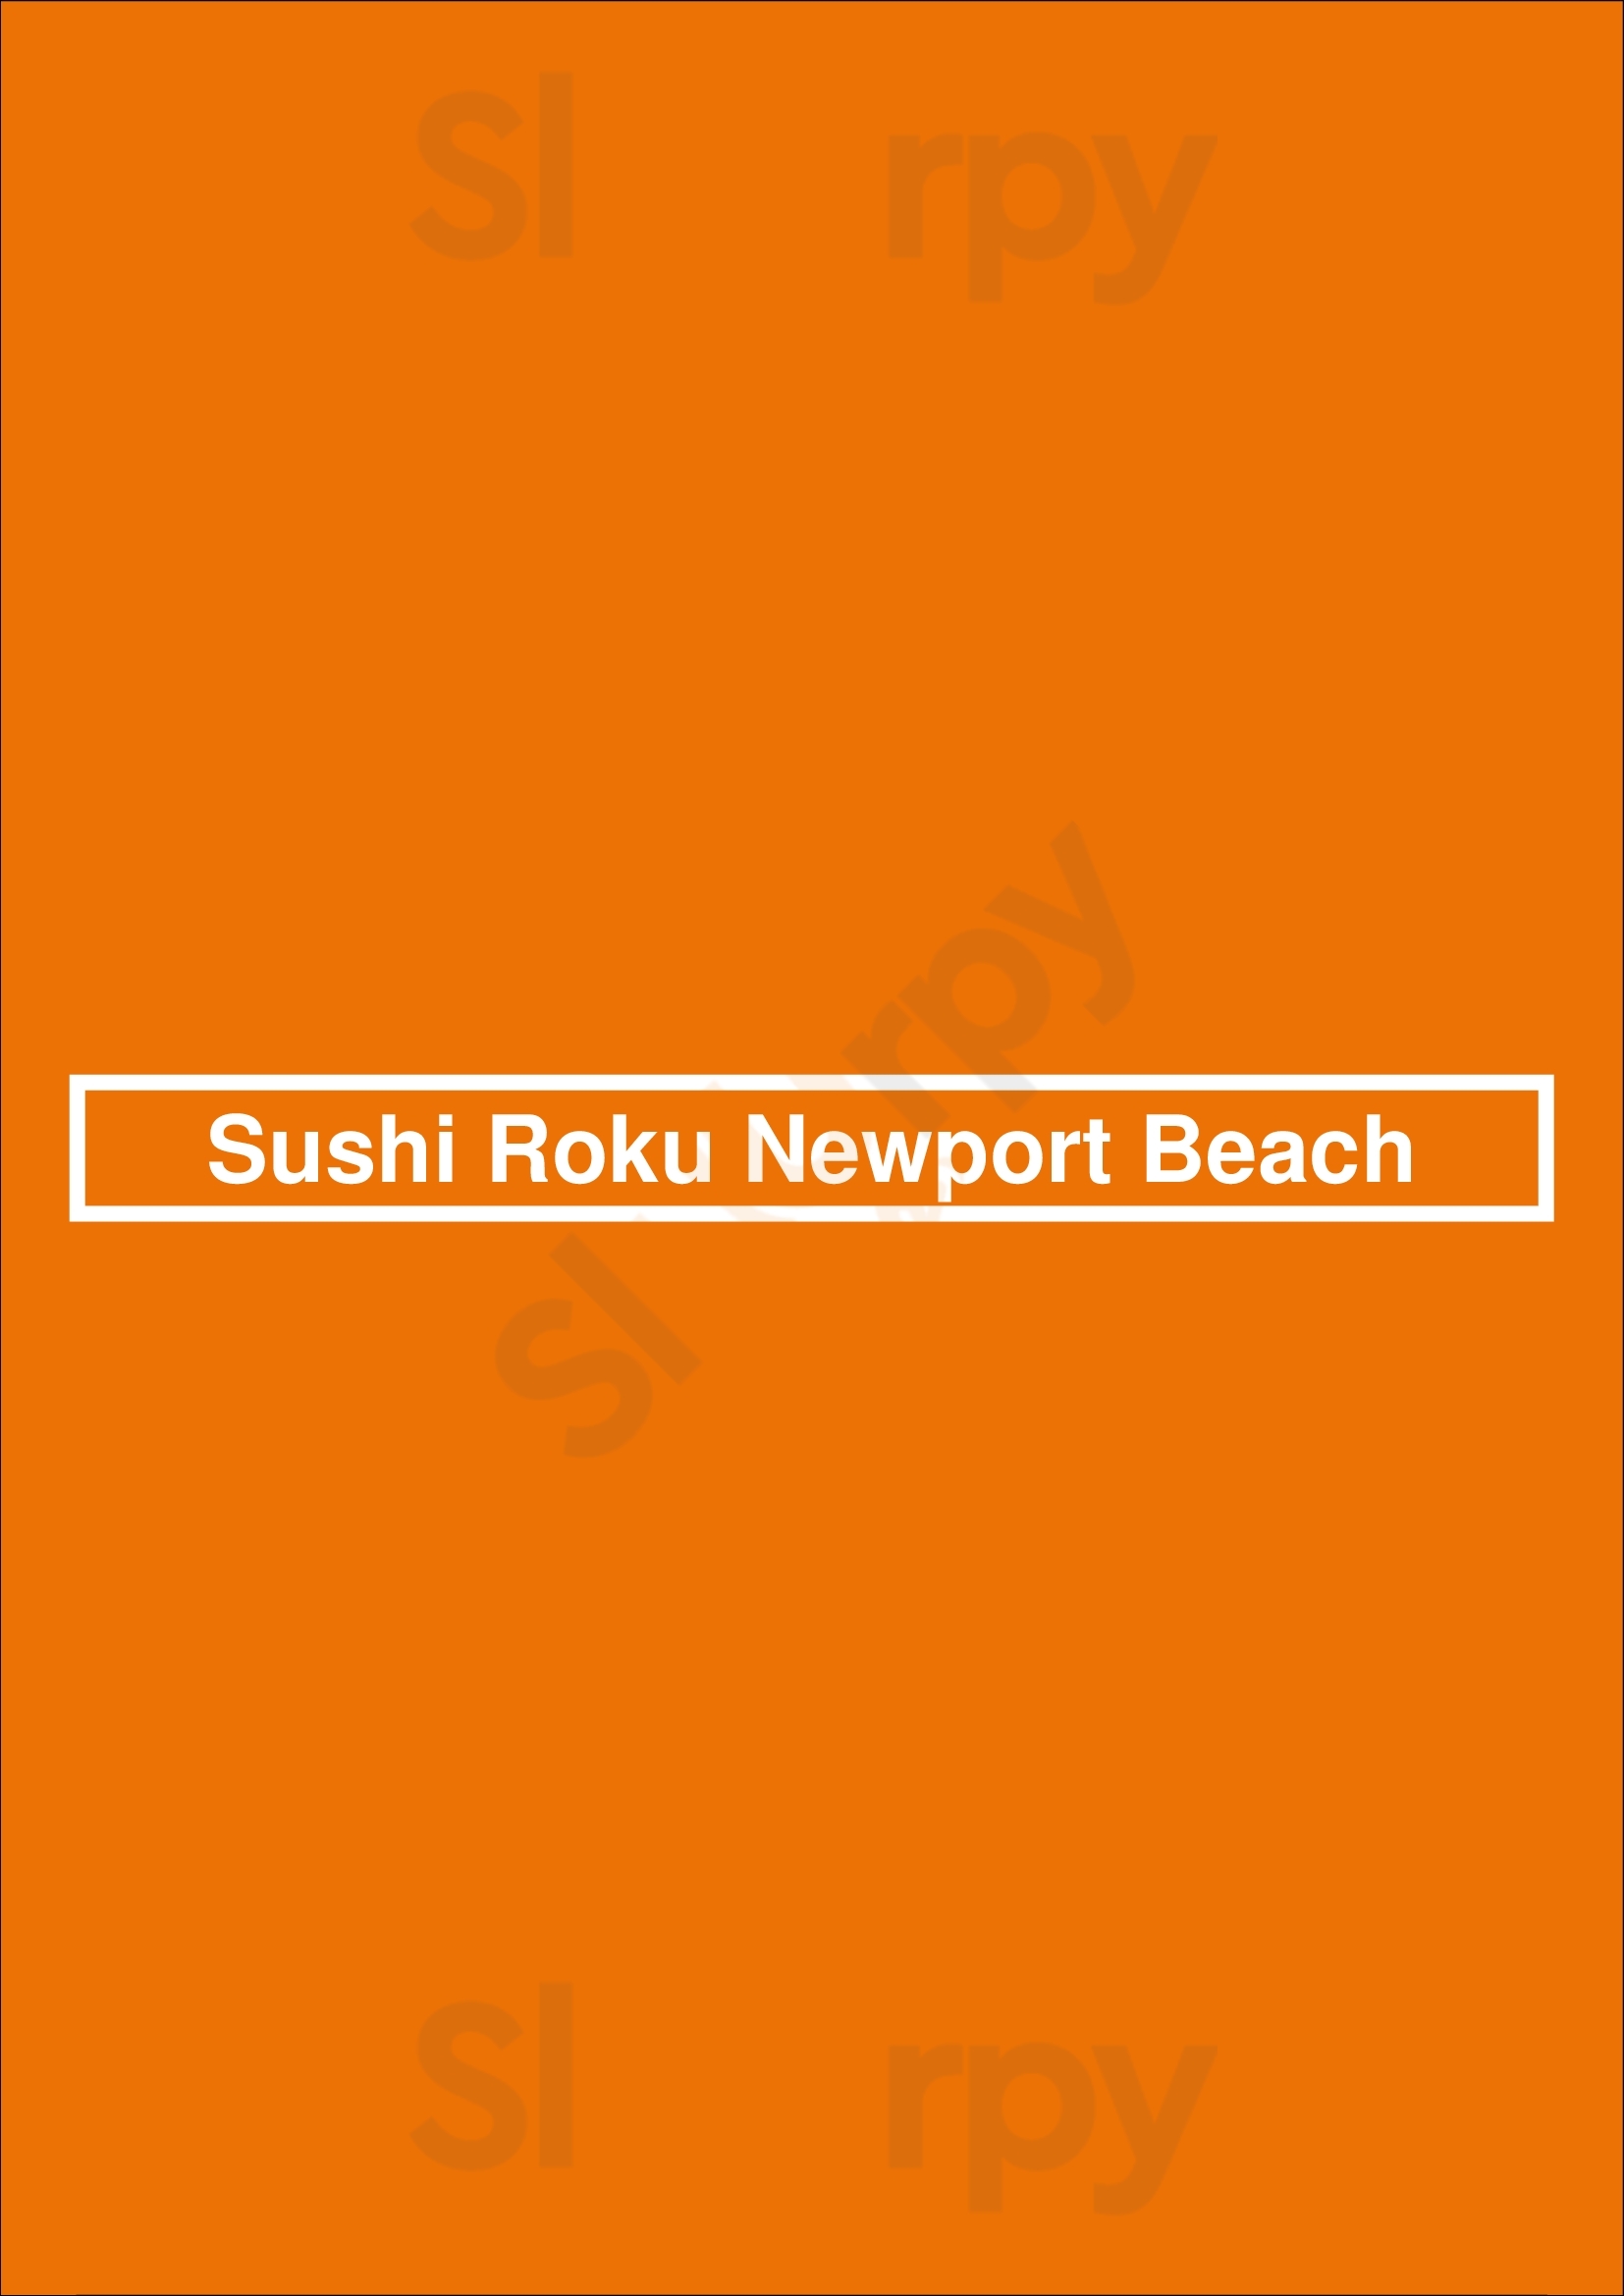 Sushi Roku Newport Beach Newport Beach Menu - 1